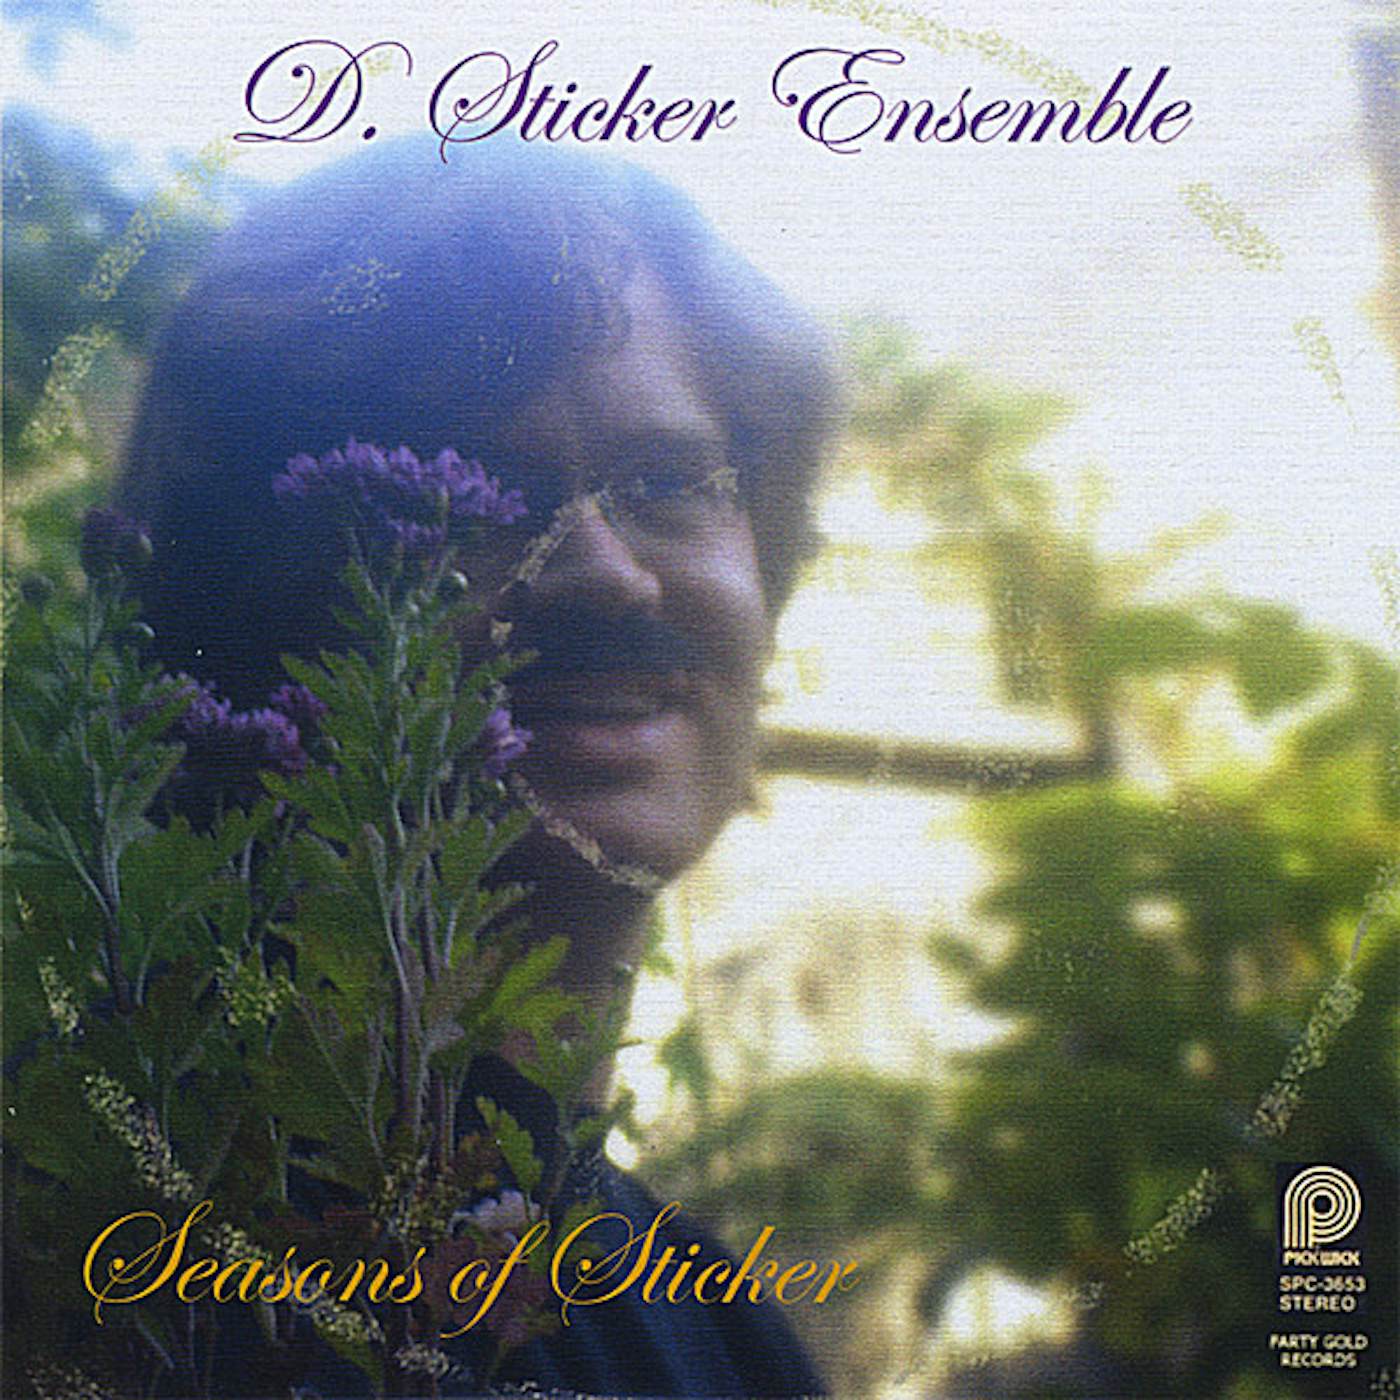 D. Sticker Ensemble SEASONS OF STICKER CD